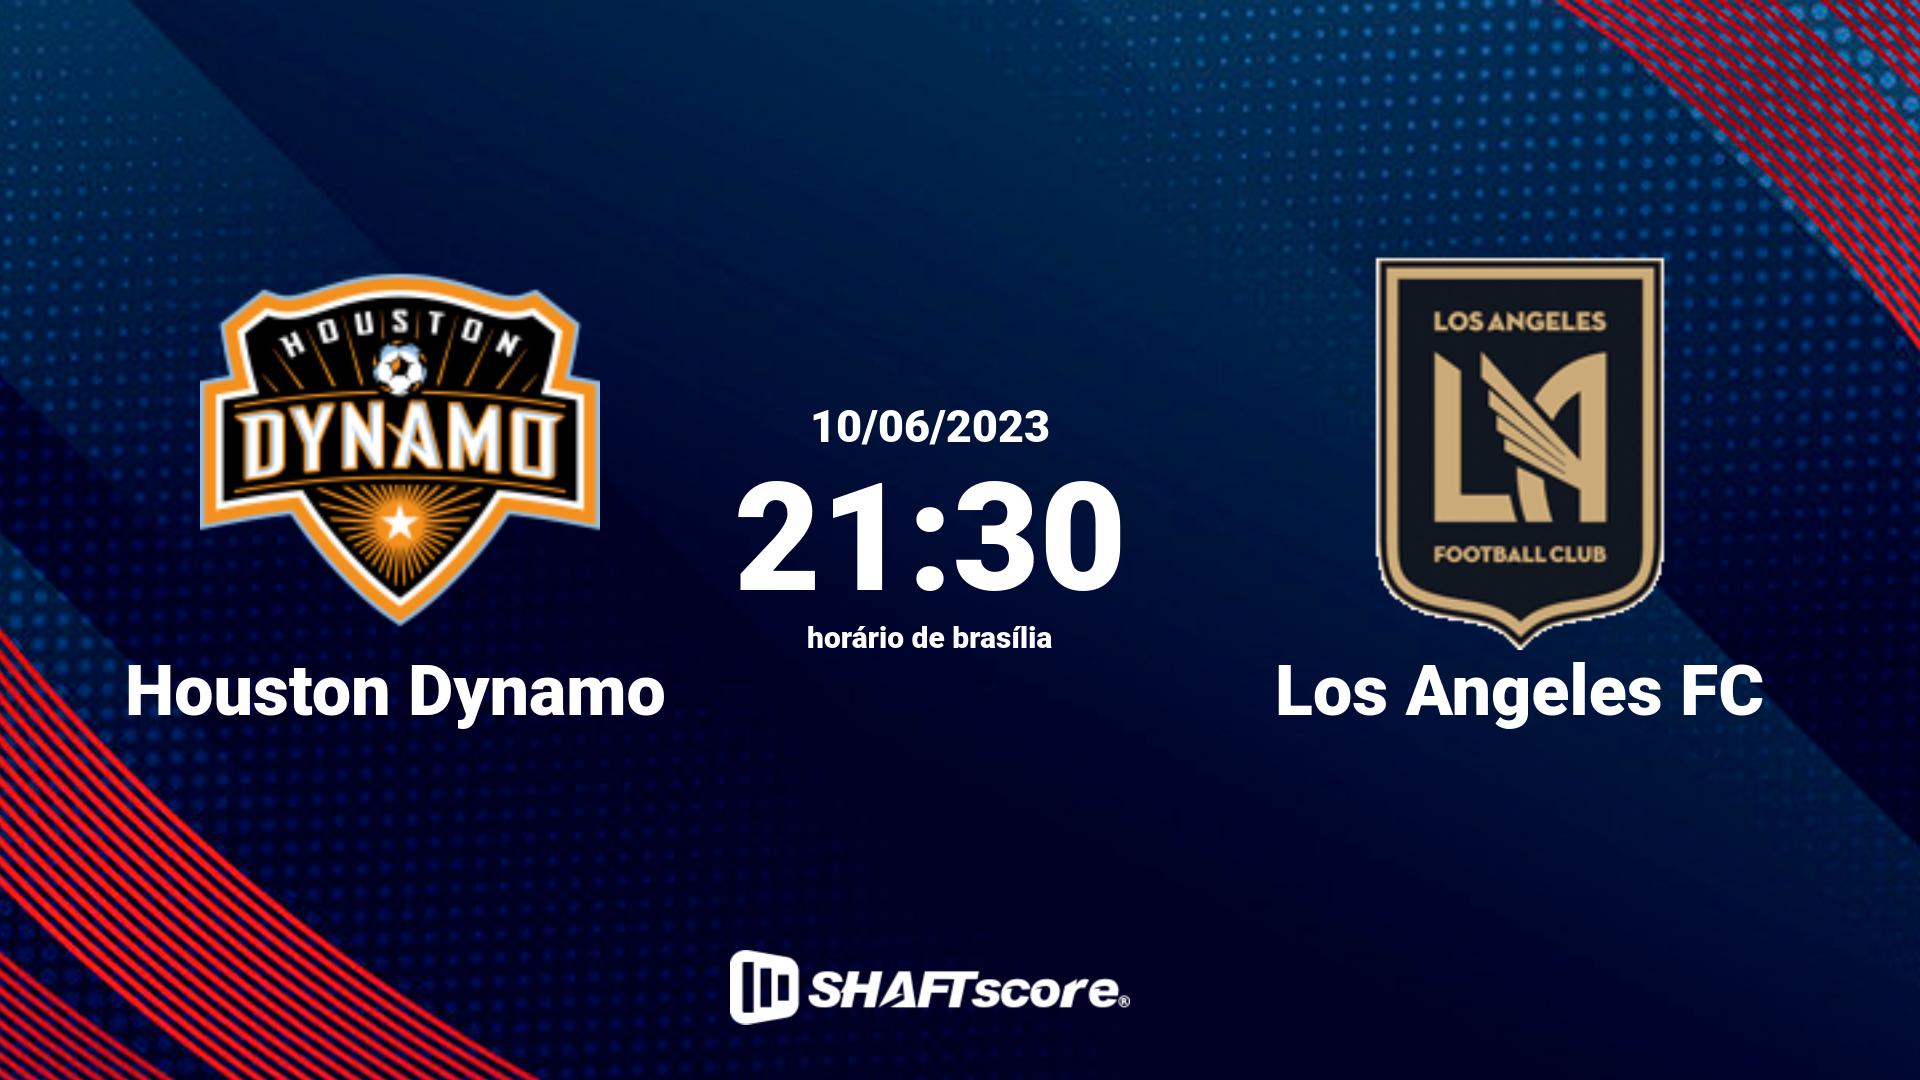 Estatísticas do jogo Houston Dynamo vs Los Angeles FC 10.06 21:30